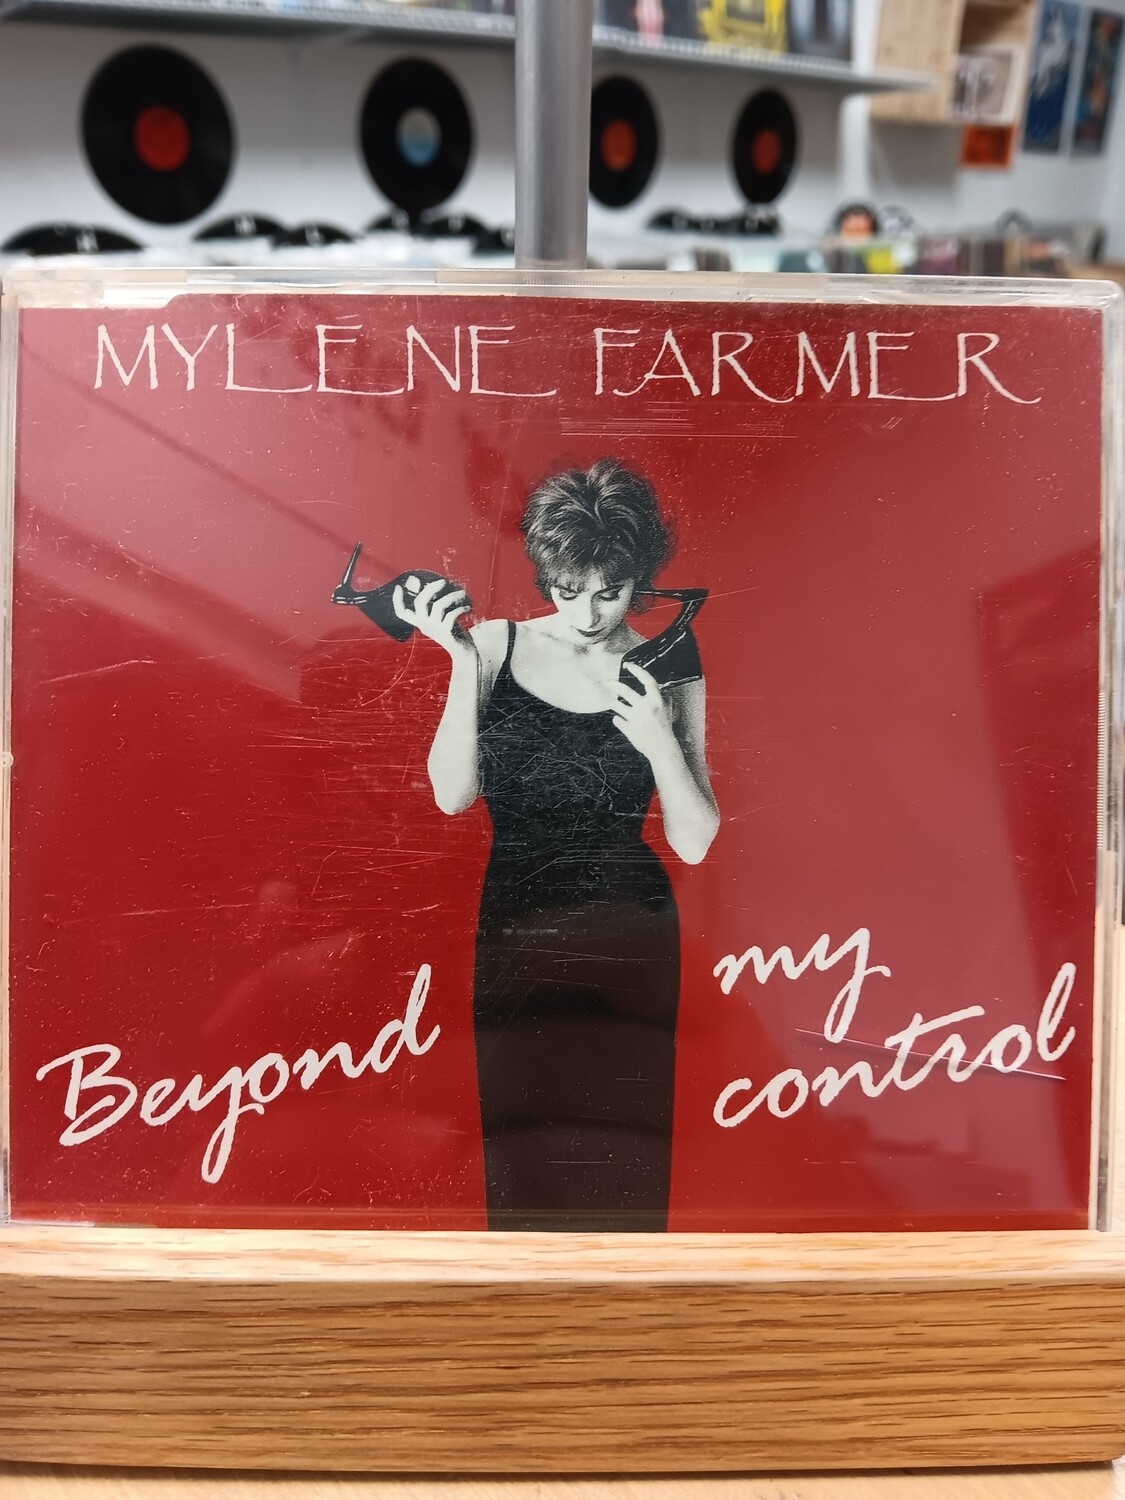 Mylène Farmer - Beyond my control (CD single)